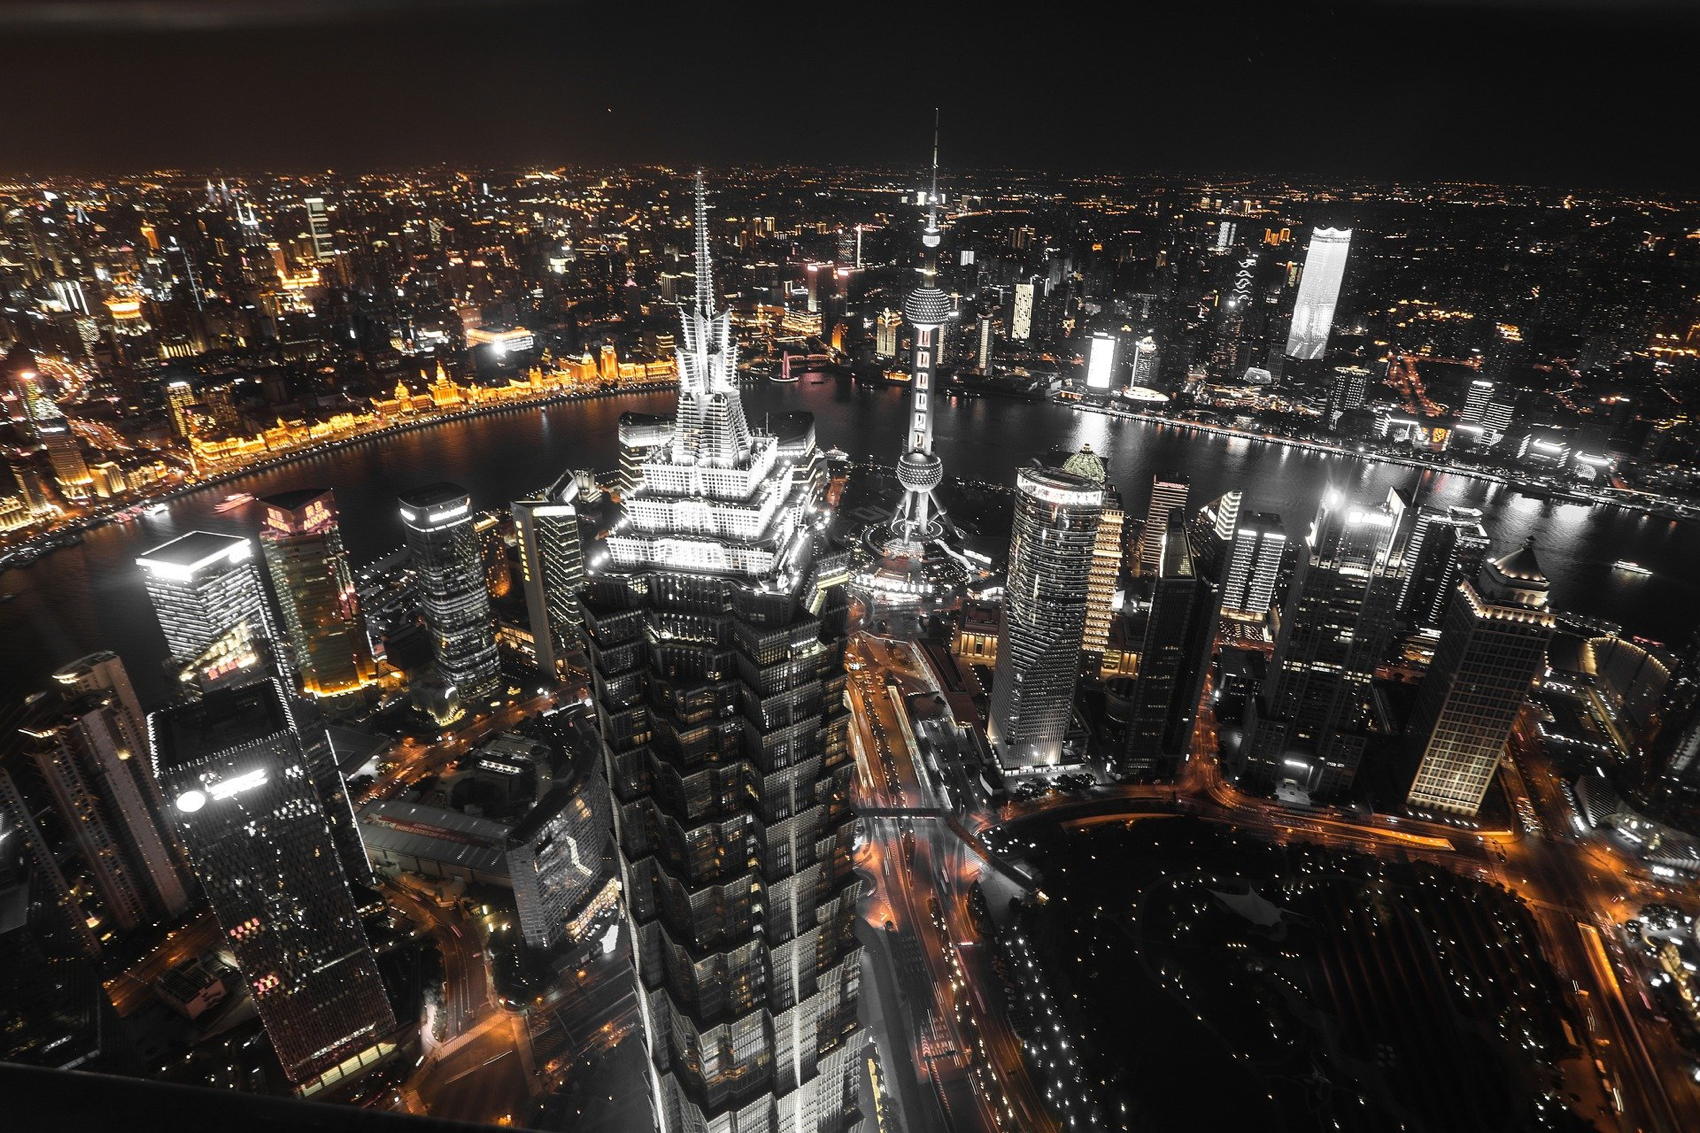 Shanghai at Night - Image by Leslin_Liu